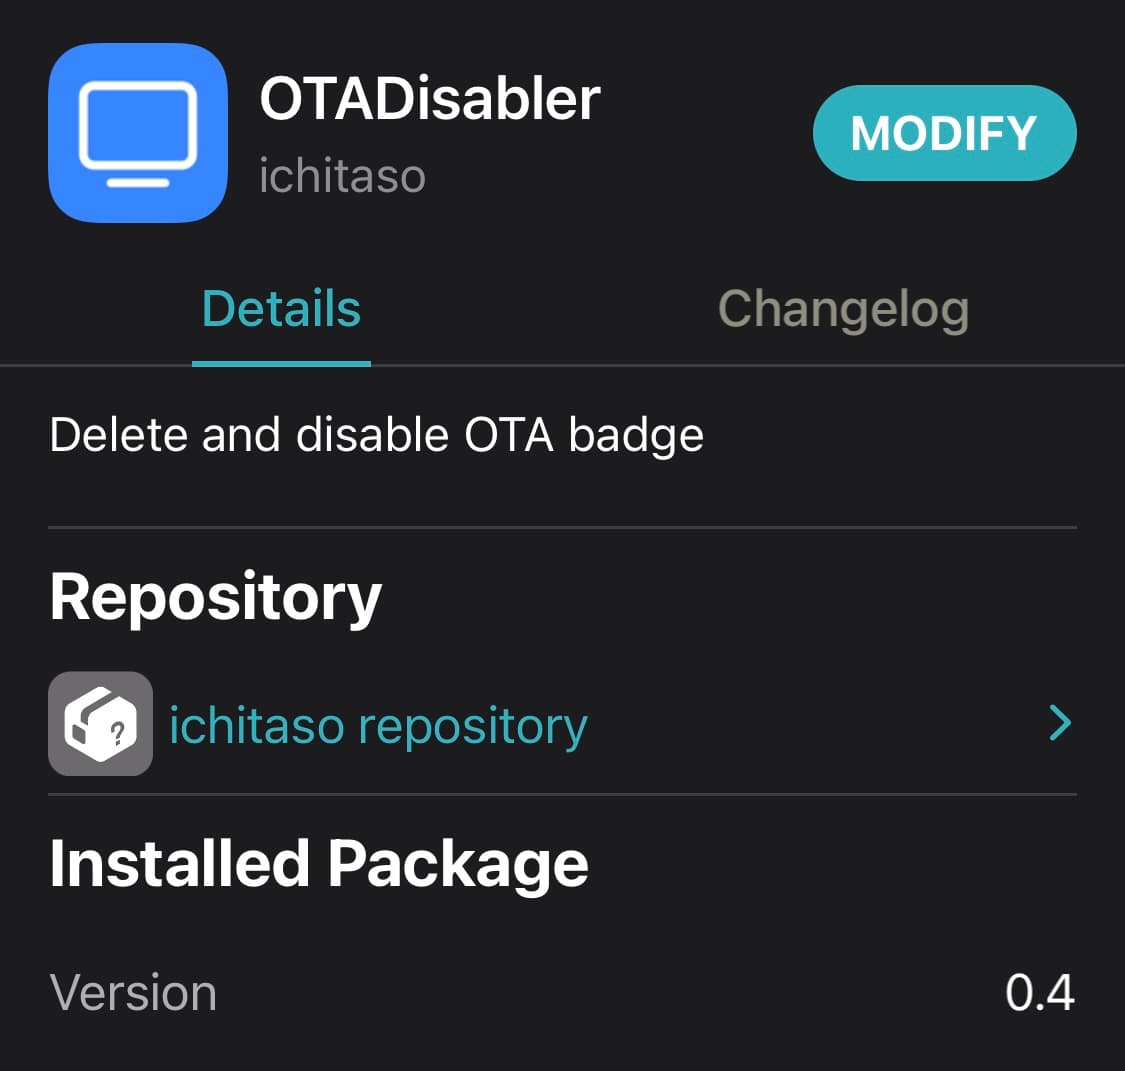 Ichitaso’s OTADisabler tweak updated for rootless so that Dopamine users can block OTA updates